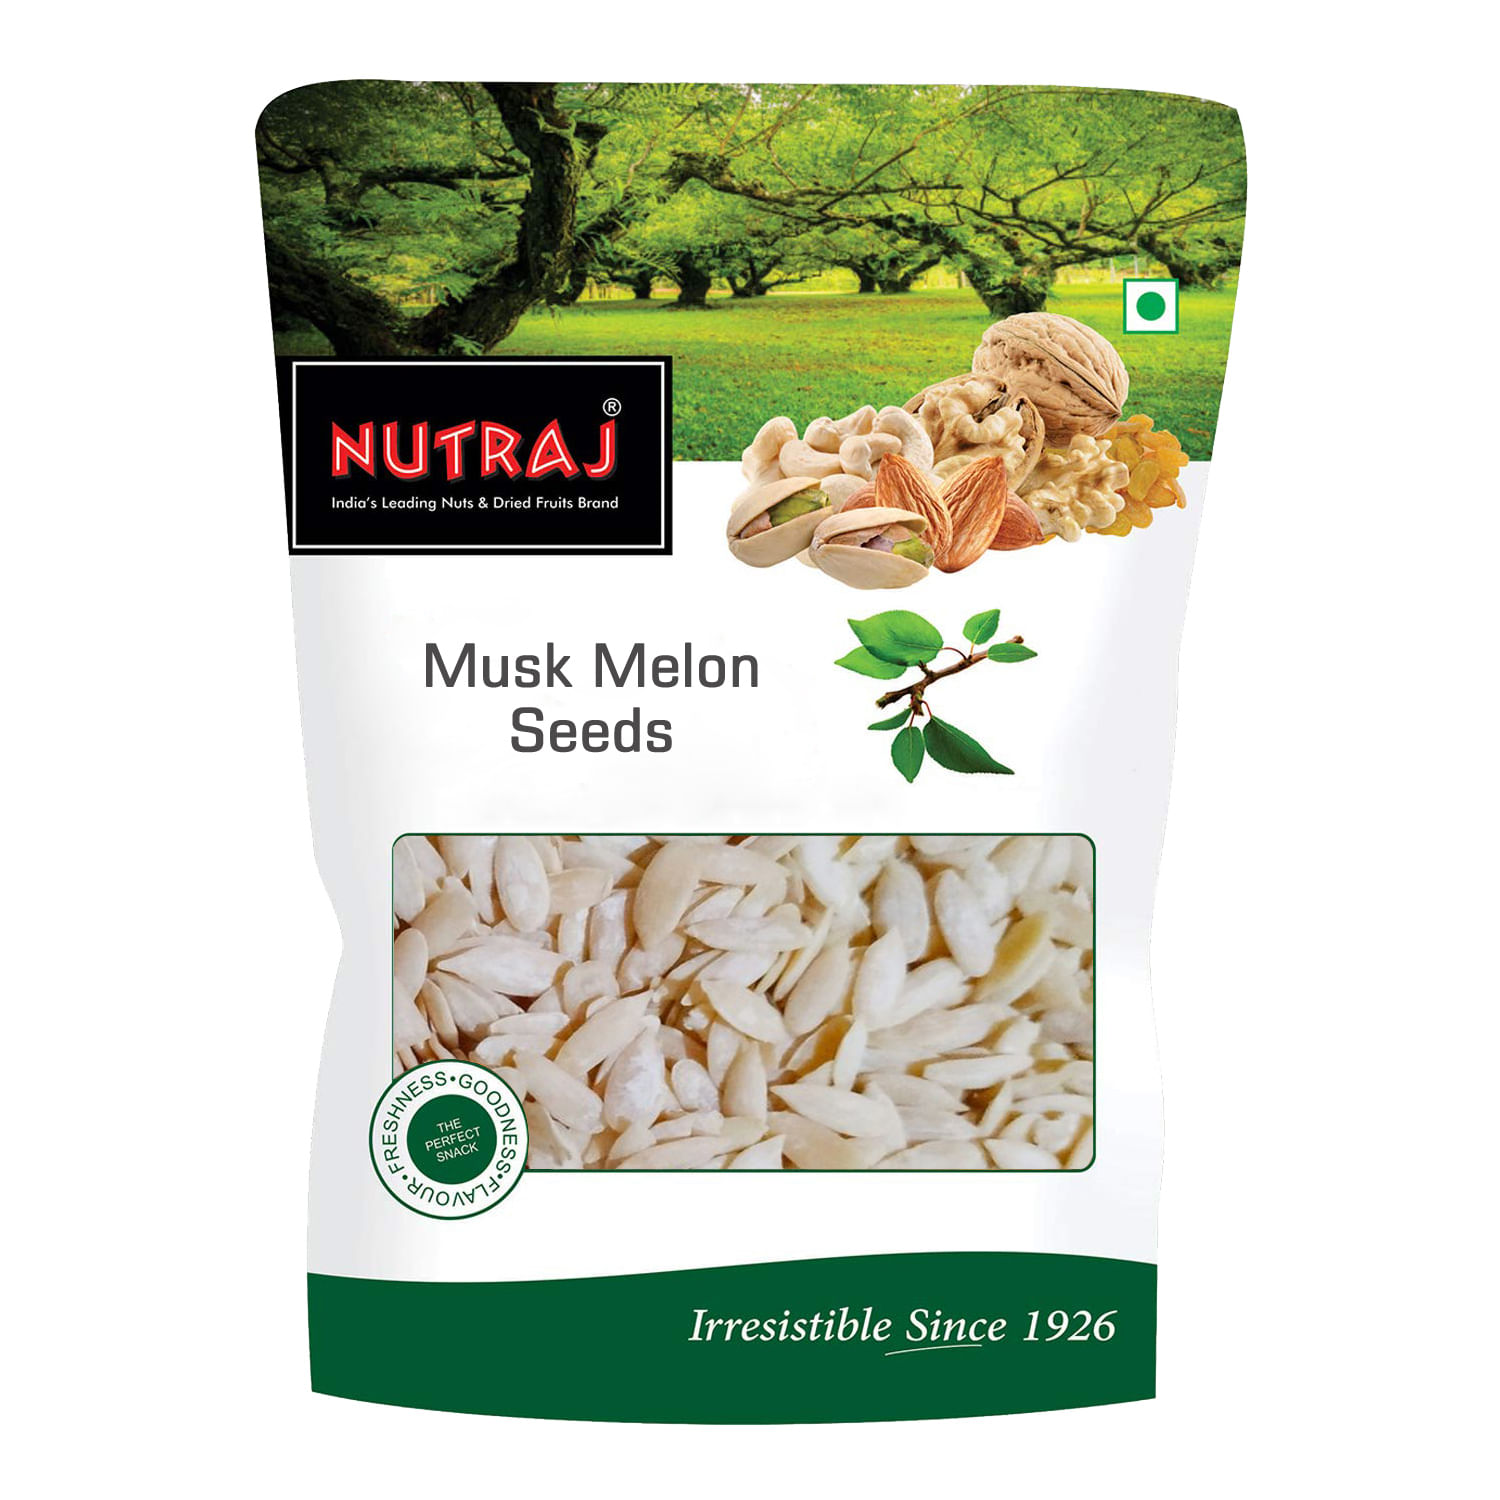 Nutraj Musk Melon Seeds 400g (2 X 200g)